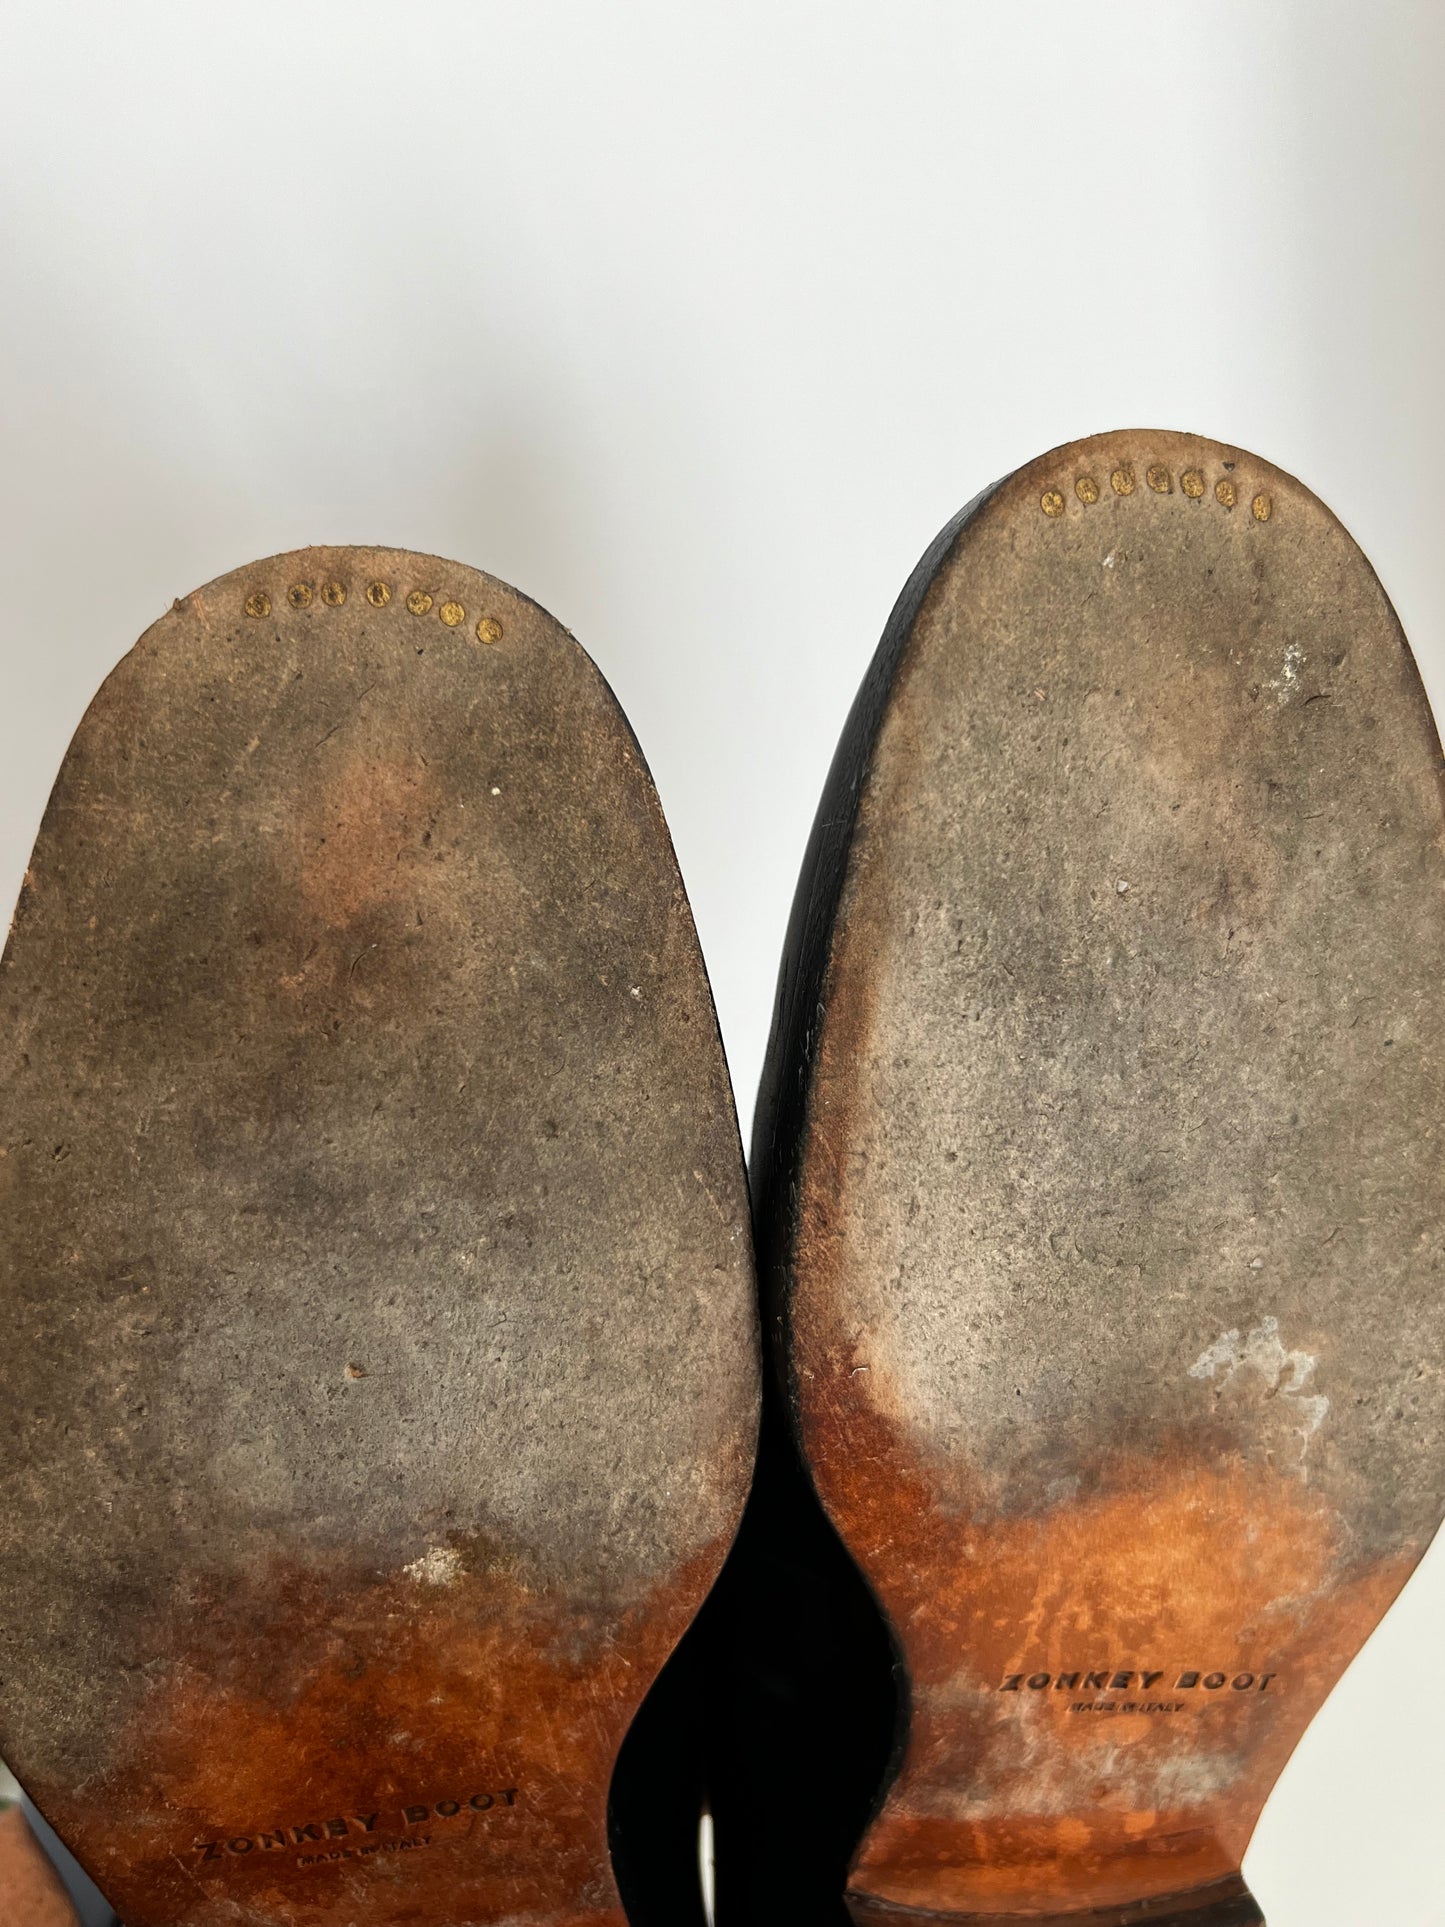 Zonkey Boots Black Penny Loafers Size 5F UK ( Men’s 6, Womens 8)